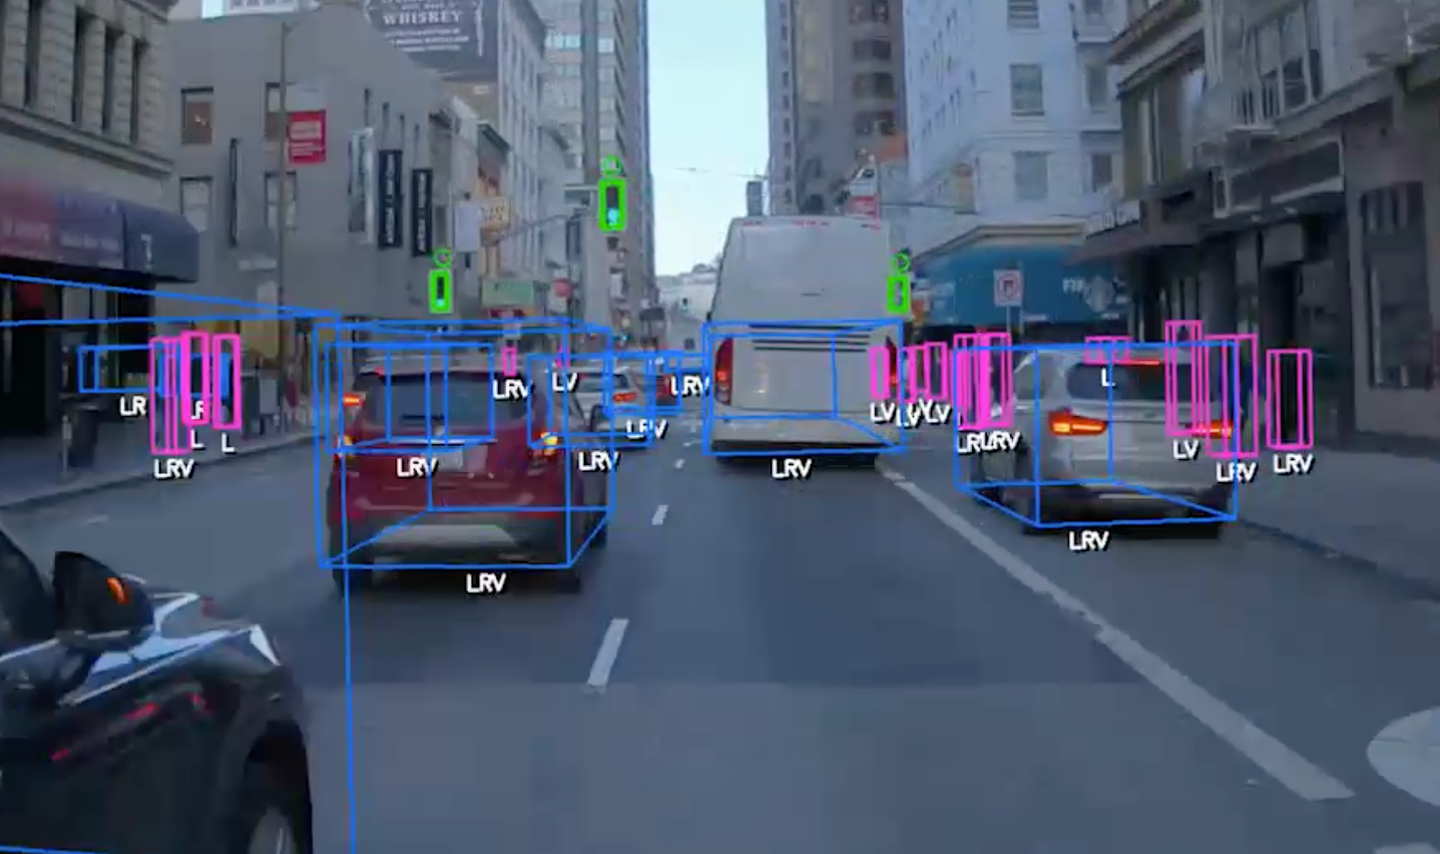 Zoox self-driving cars